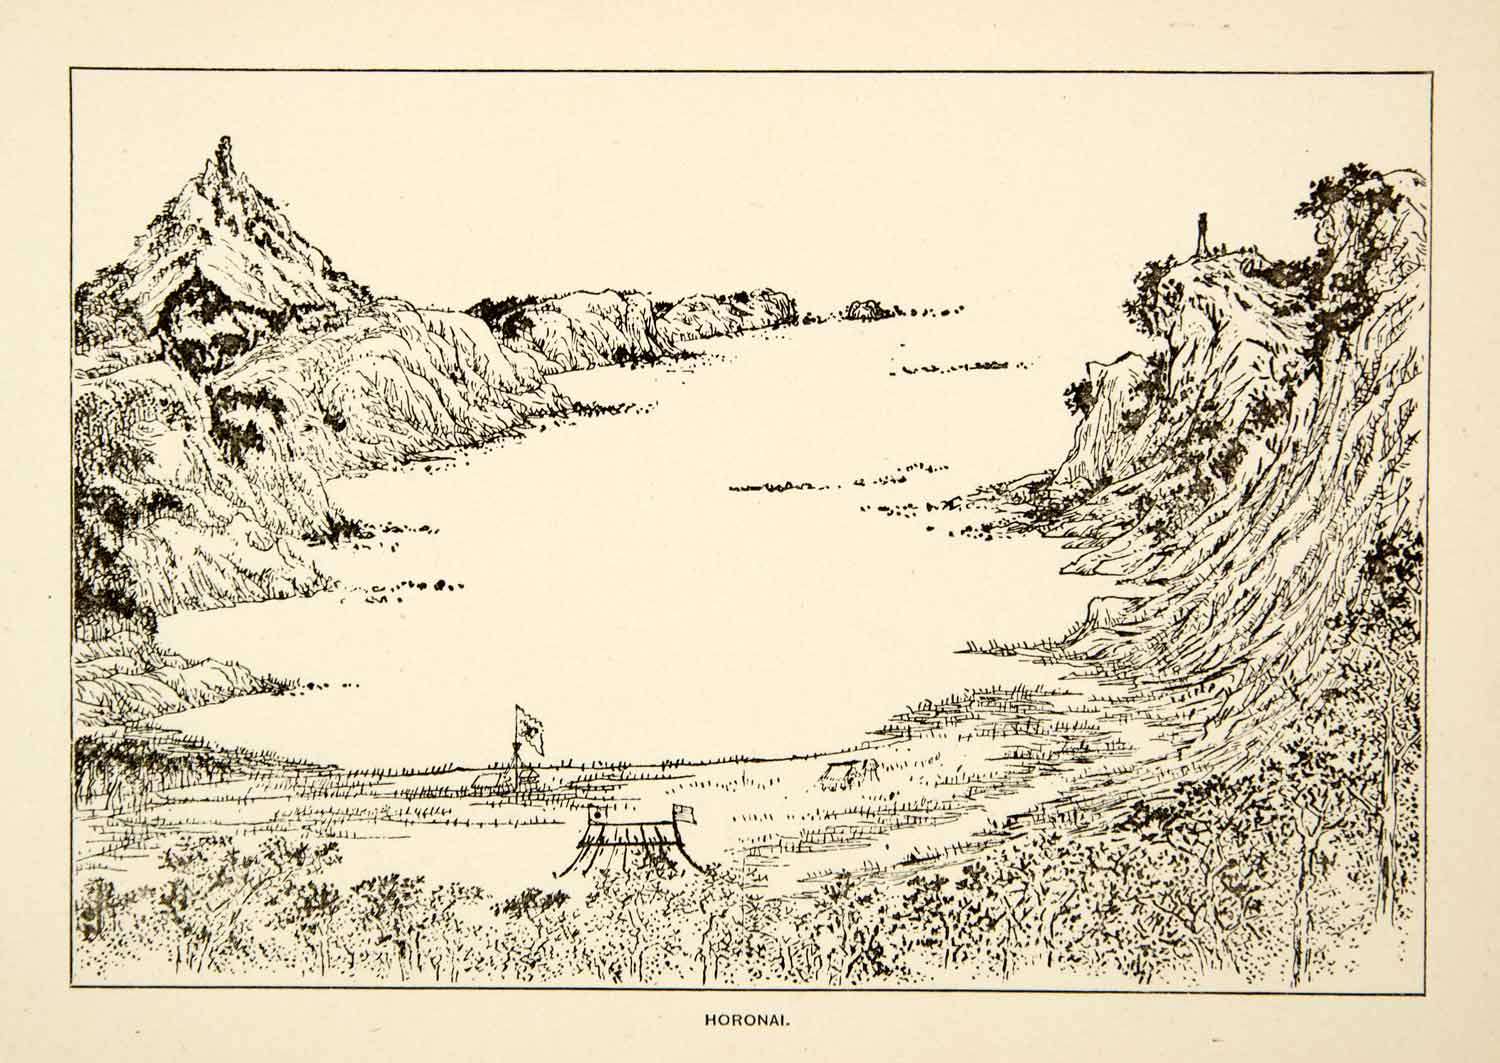 1884 Print Horonai Japan Landscape Cove Inlet Bay Cliff Mountains Rinzo XGED2